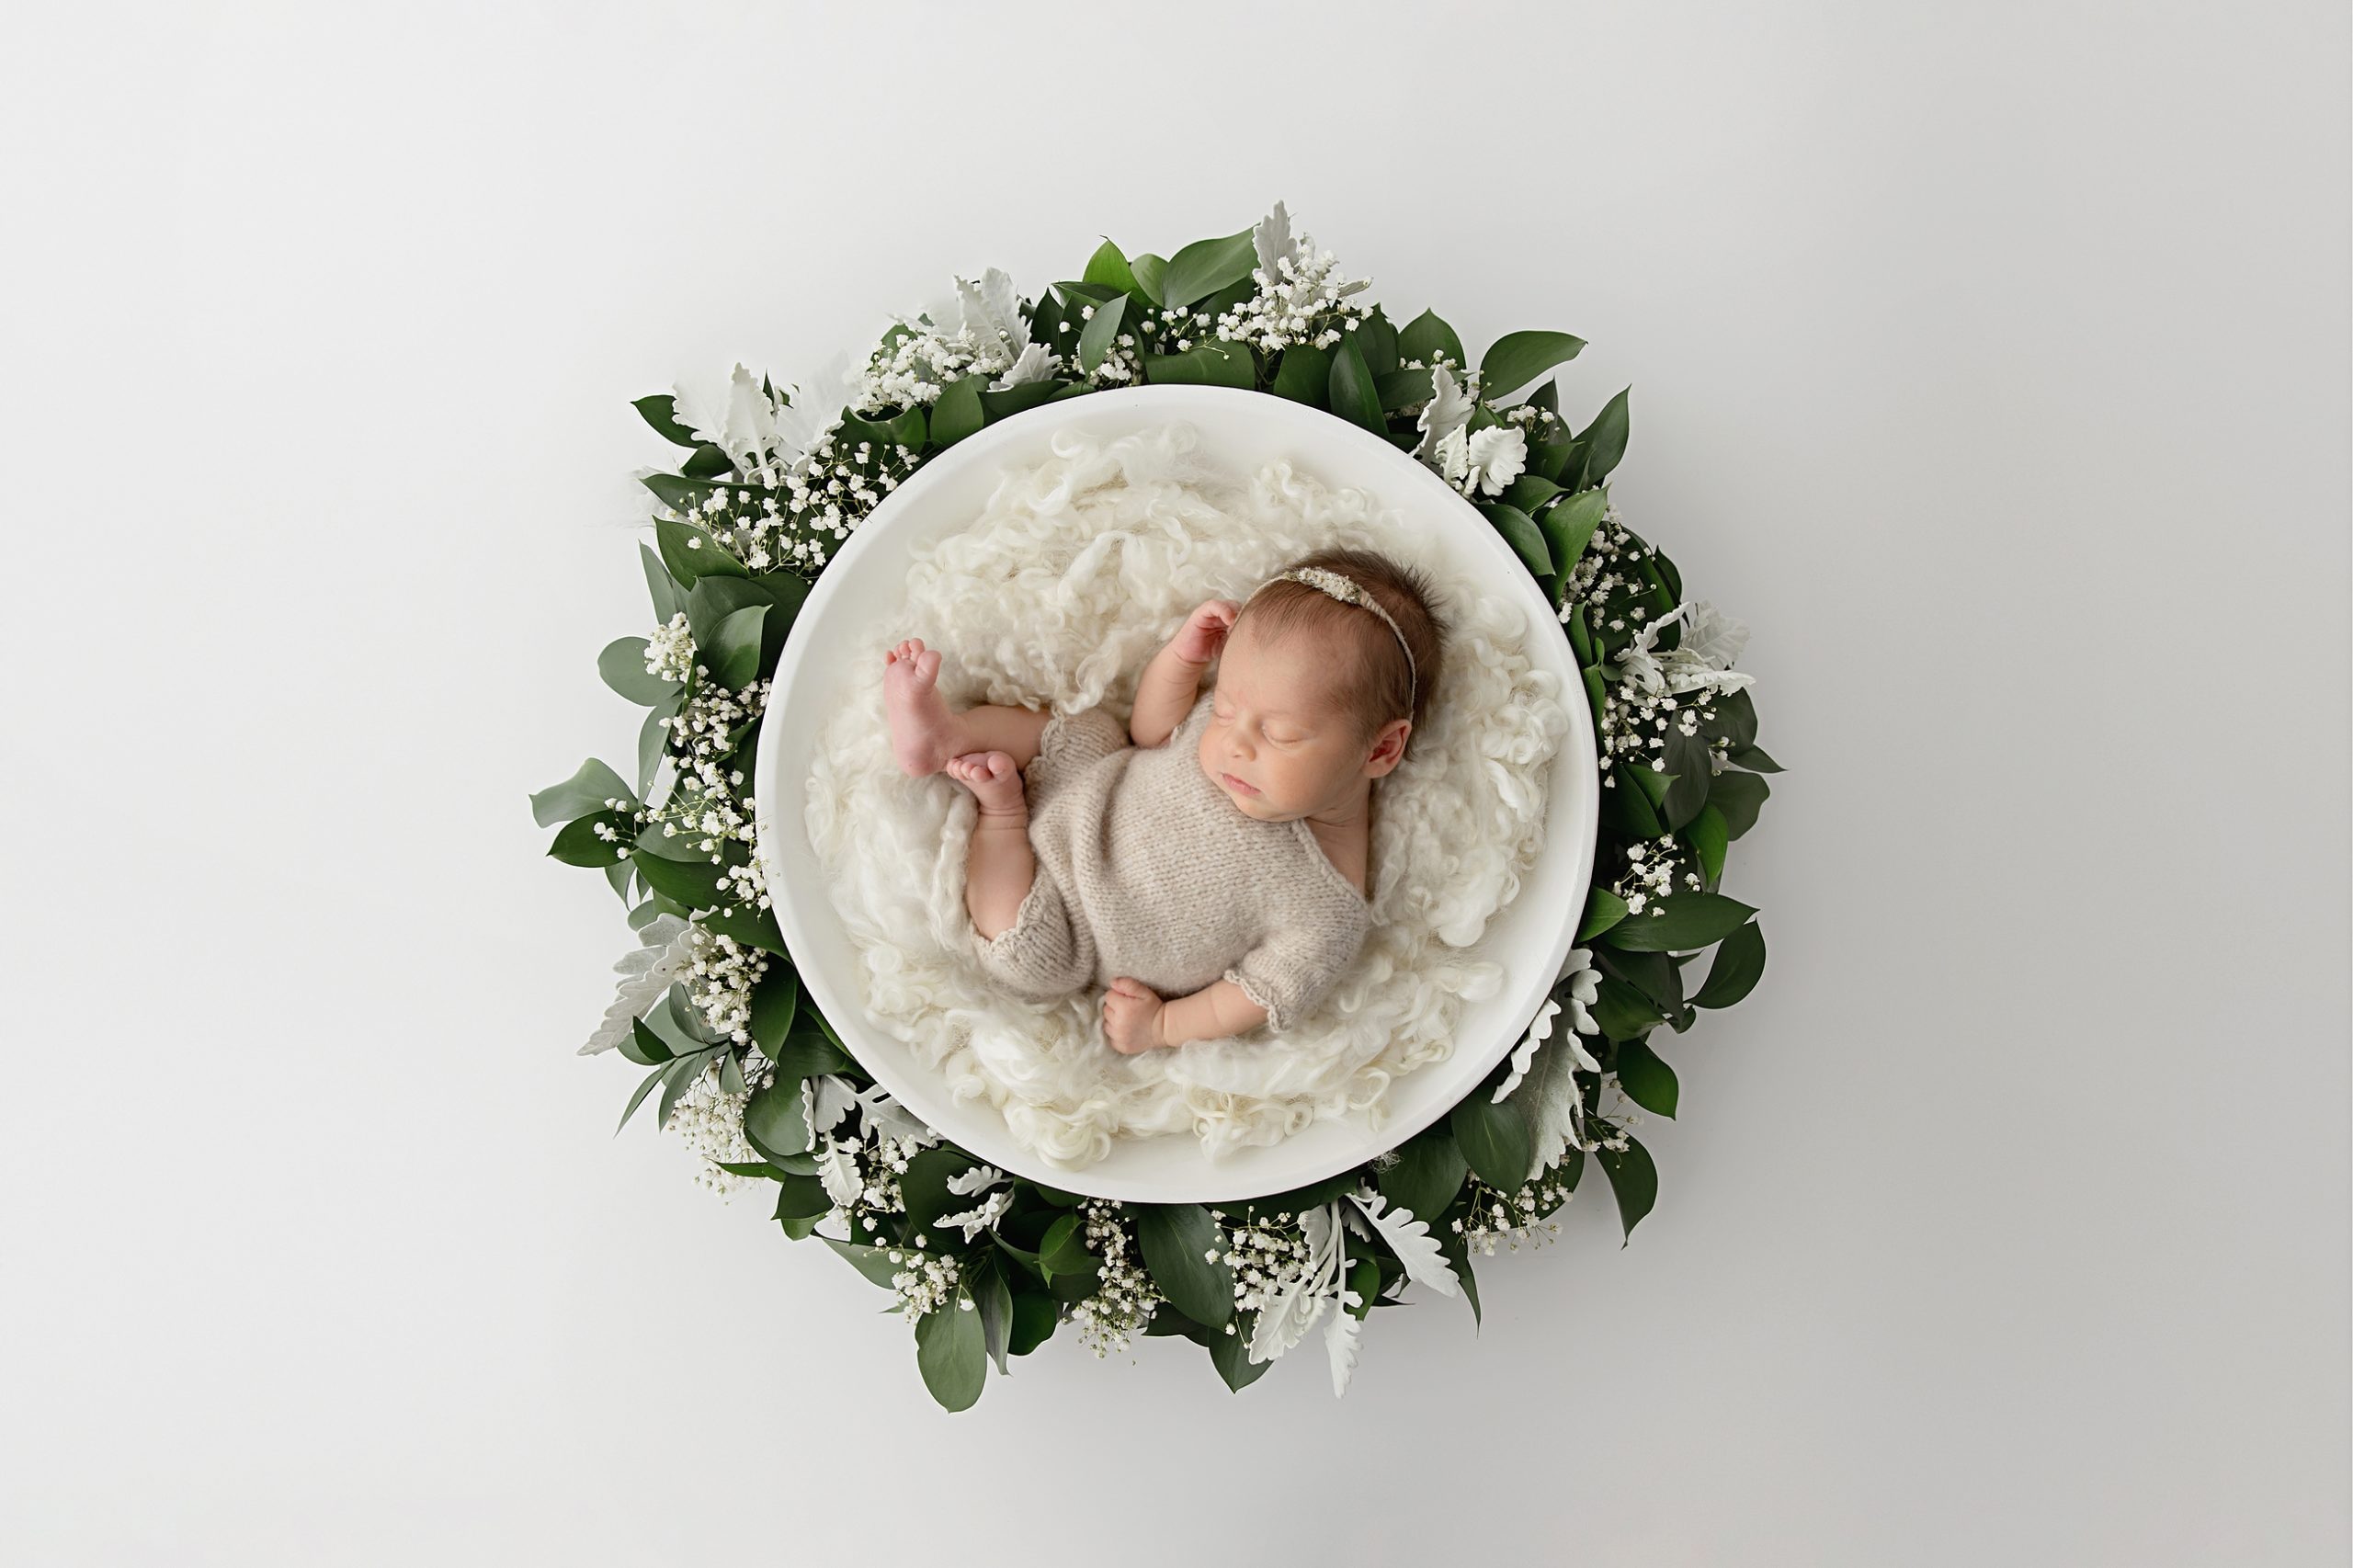 beautiful newborn portrait with a wreath of greenery baby plan